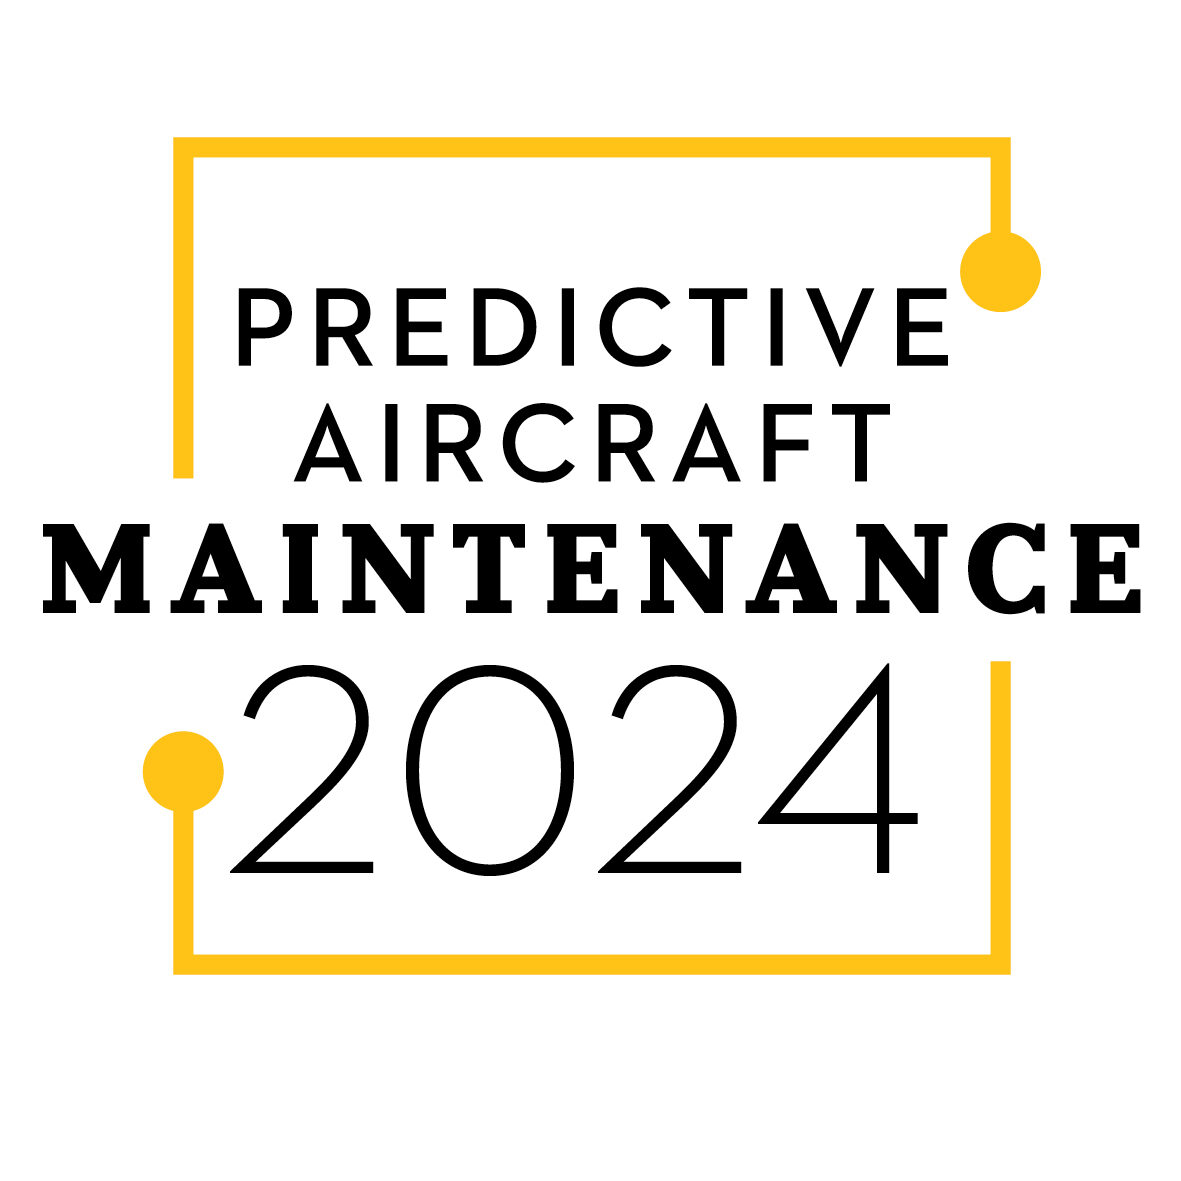 The Predictive Aircraft Maintenance Conference 2023